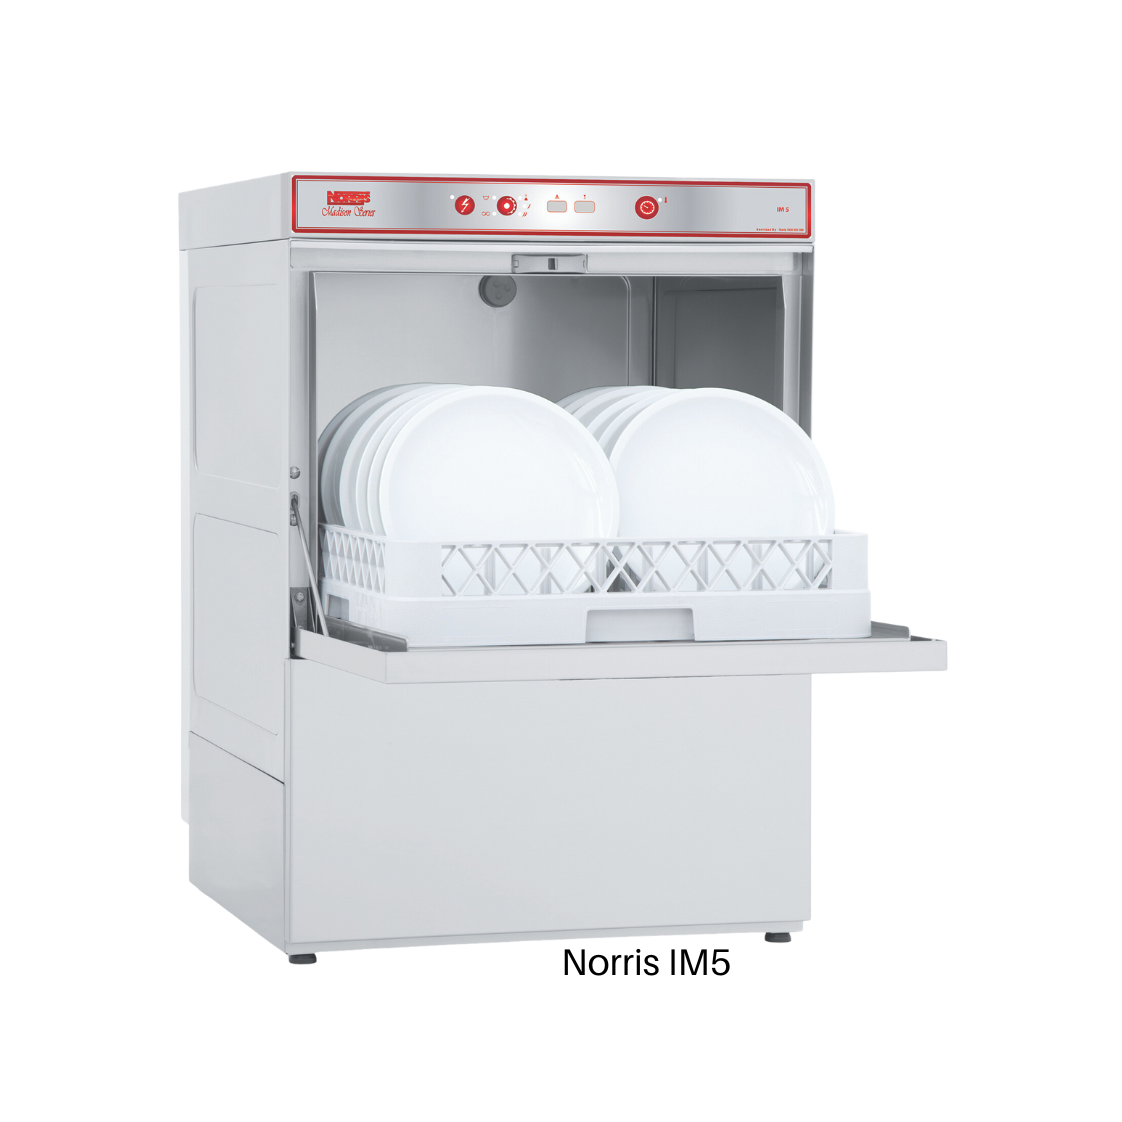 Norris IM5 Commercial Dishwasher